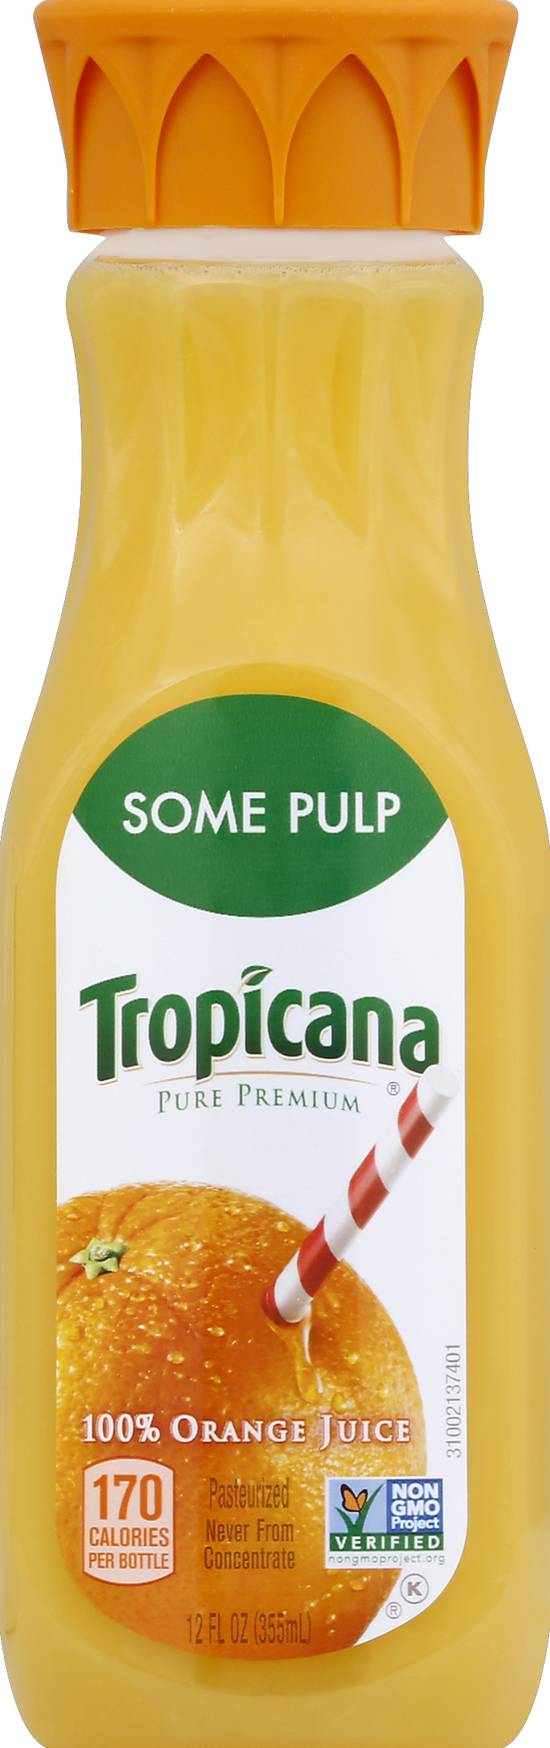 Tropicana Some Pulp Orange Juice (12 fl oz)